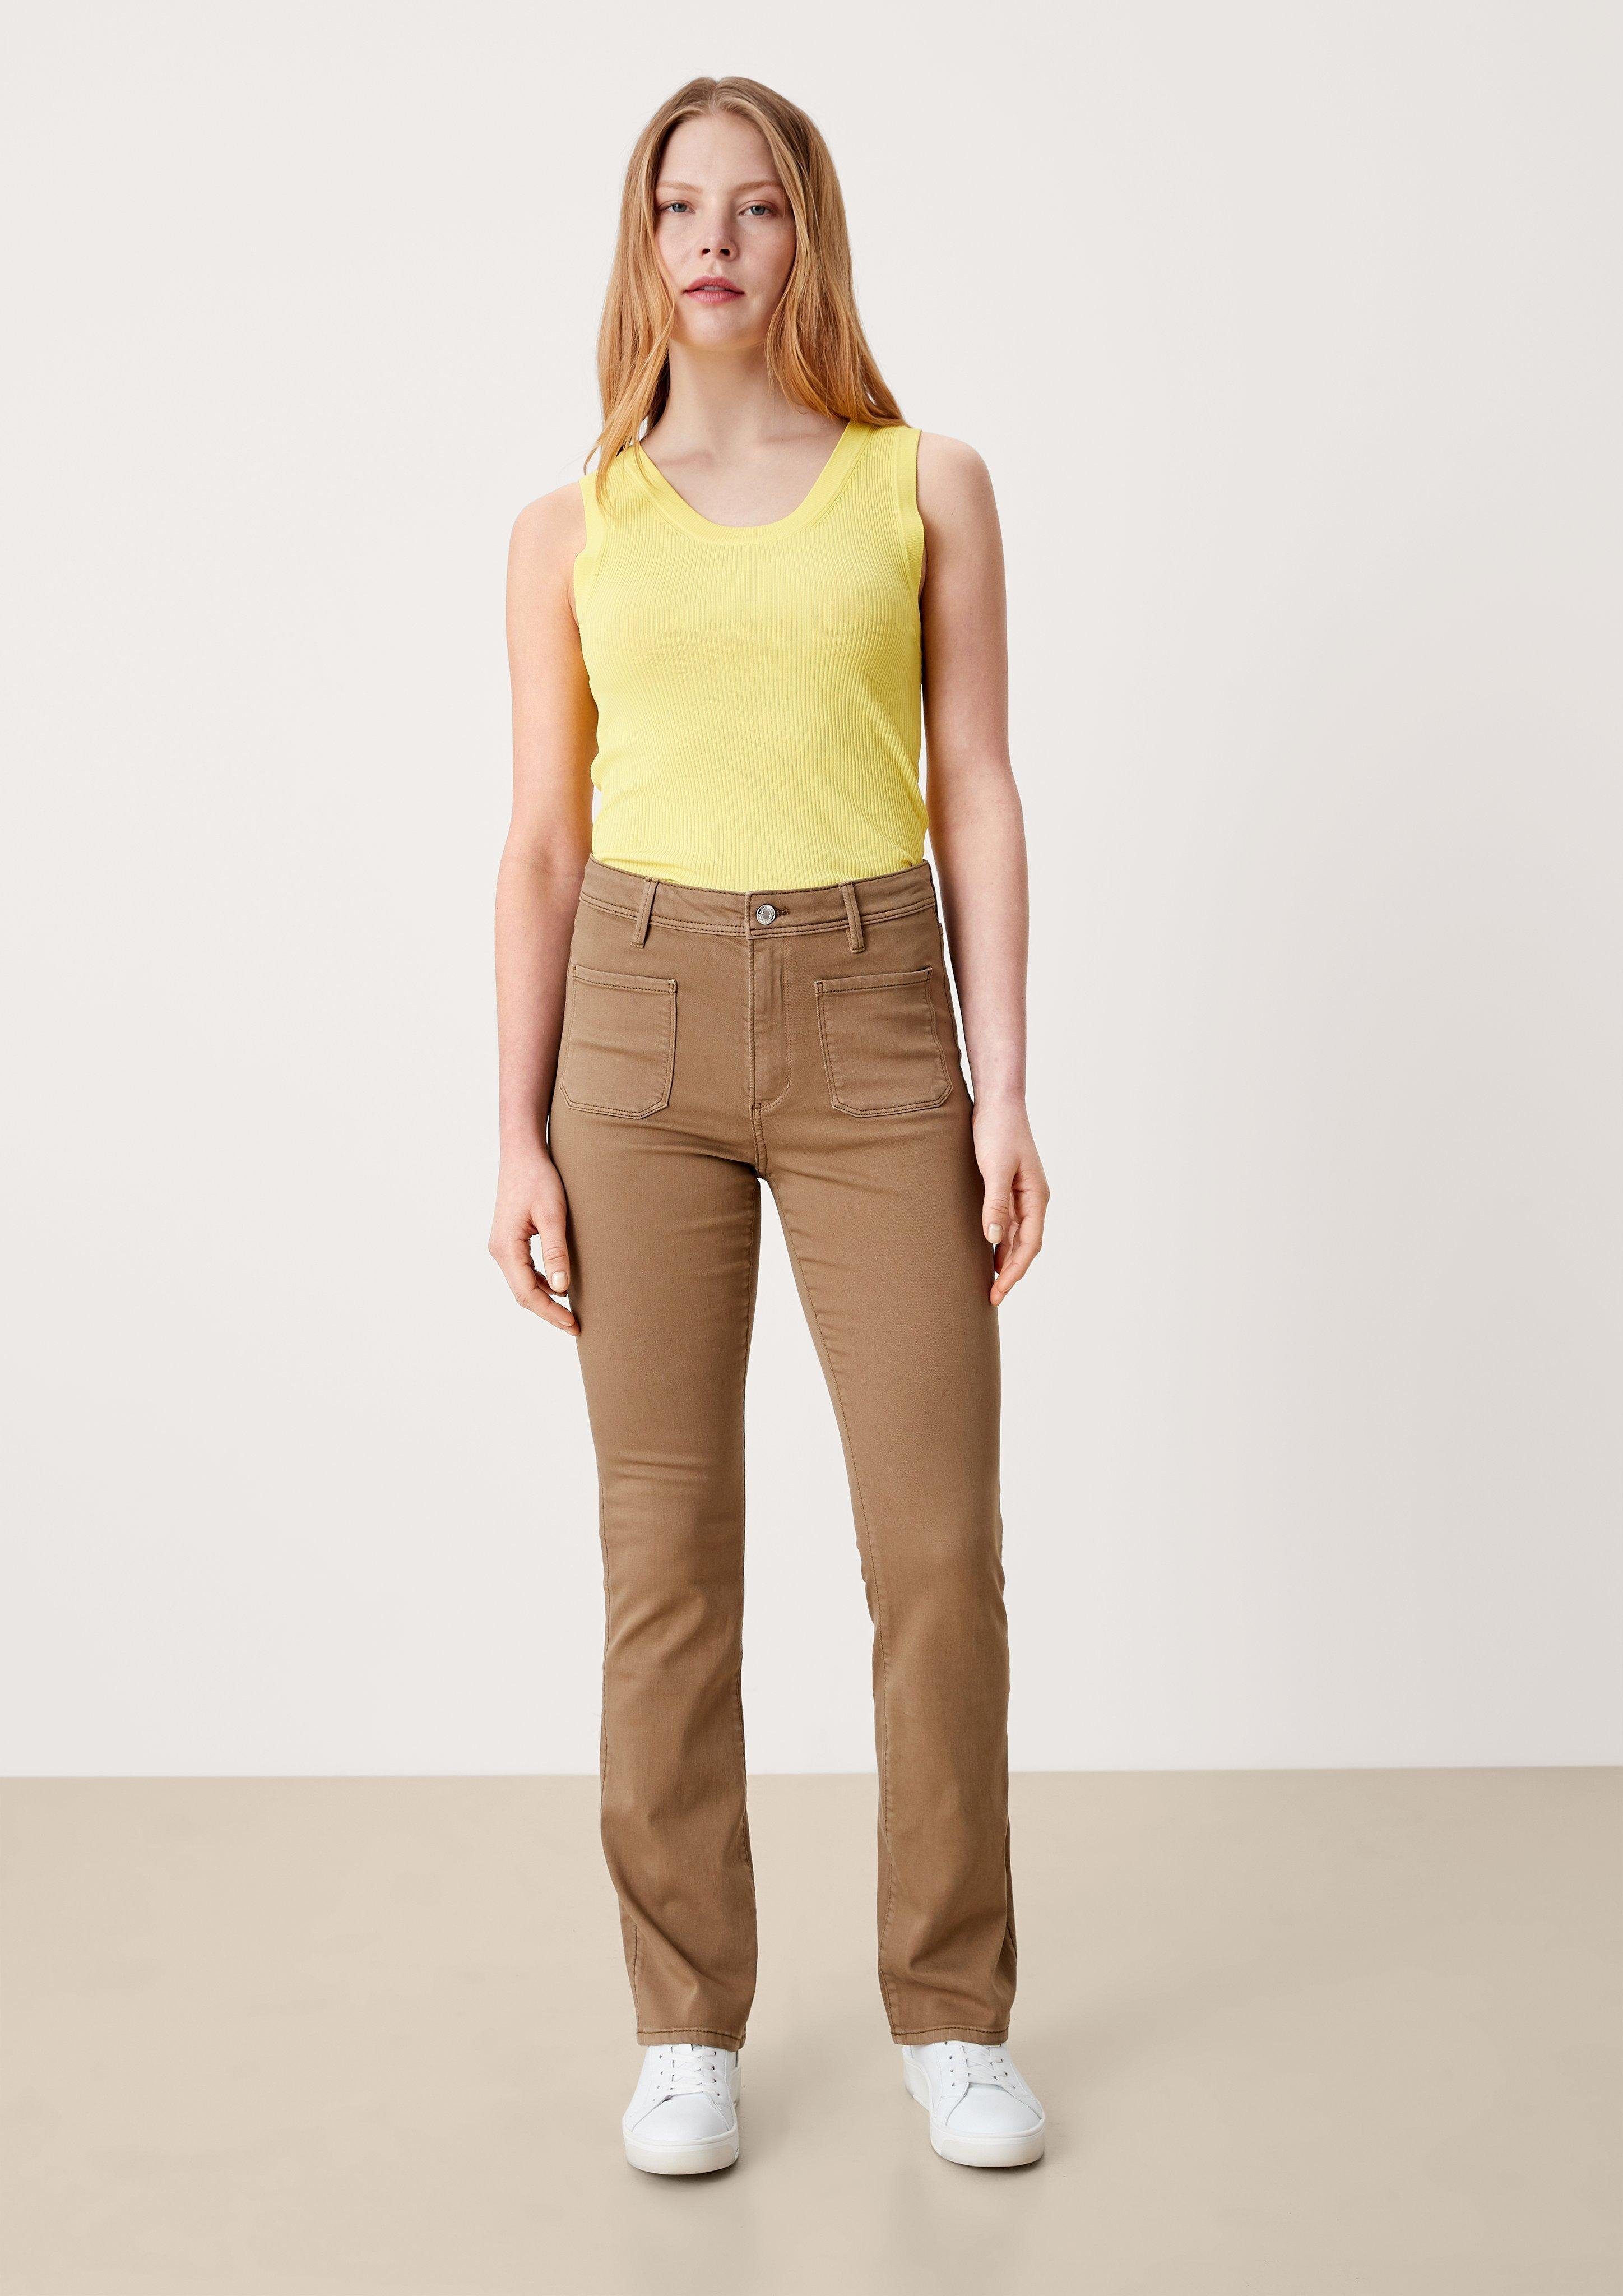 / Fit / Bootcut 5-Pocket-Jeans Rise Slim Beverly Jeans Leg / Leder-Patch s.Oliver brown High